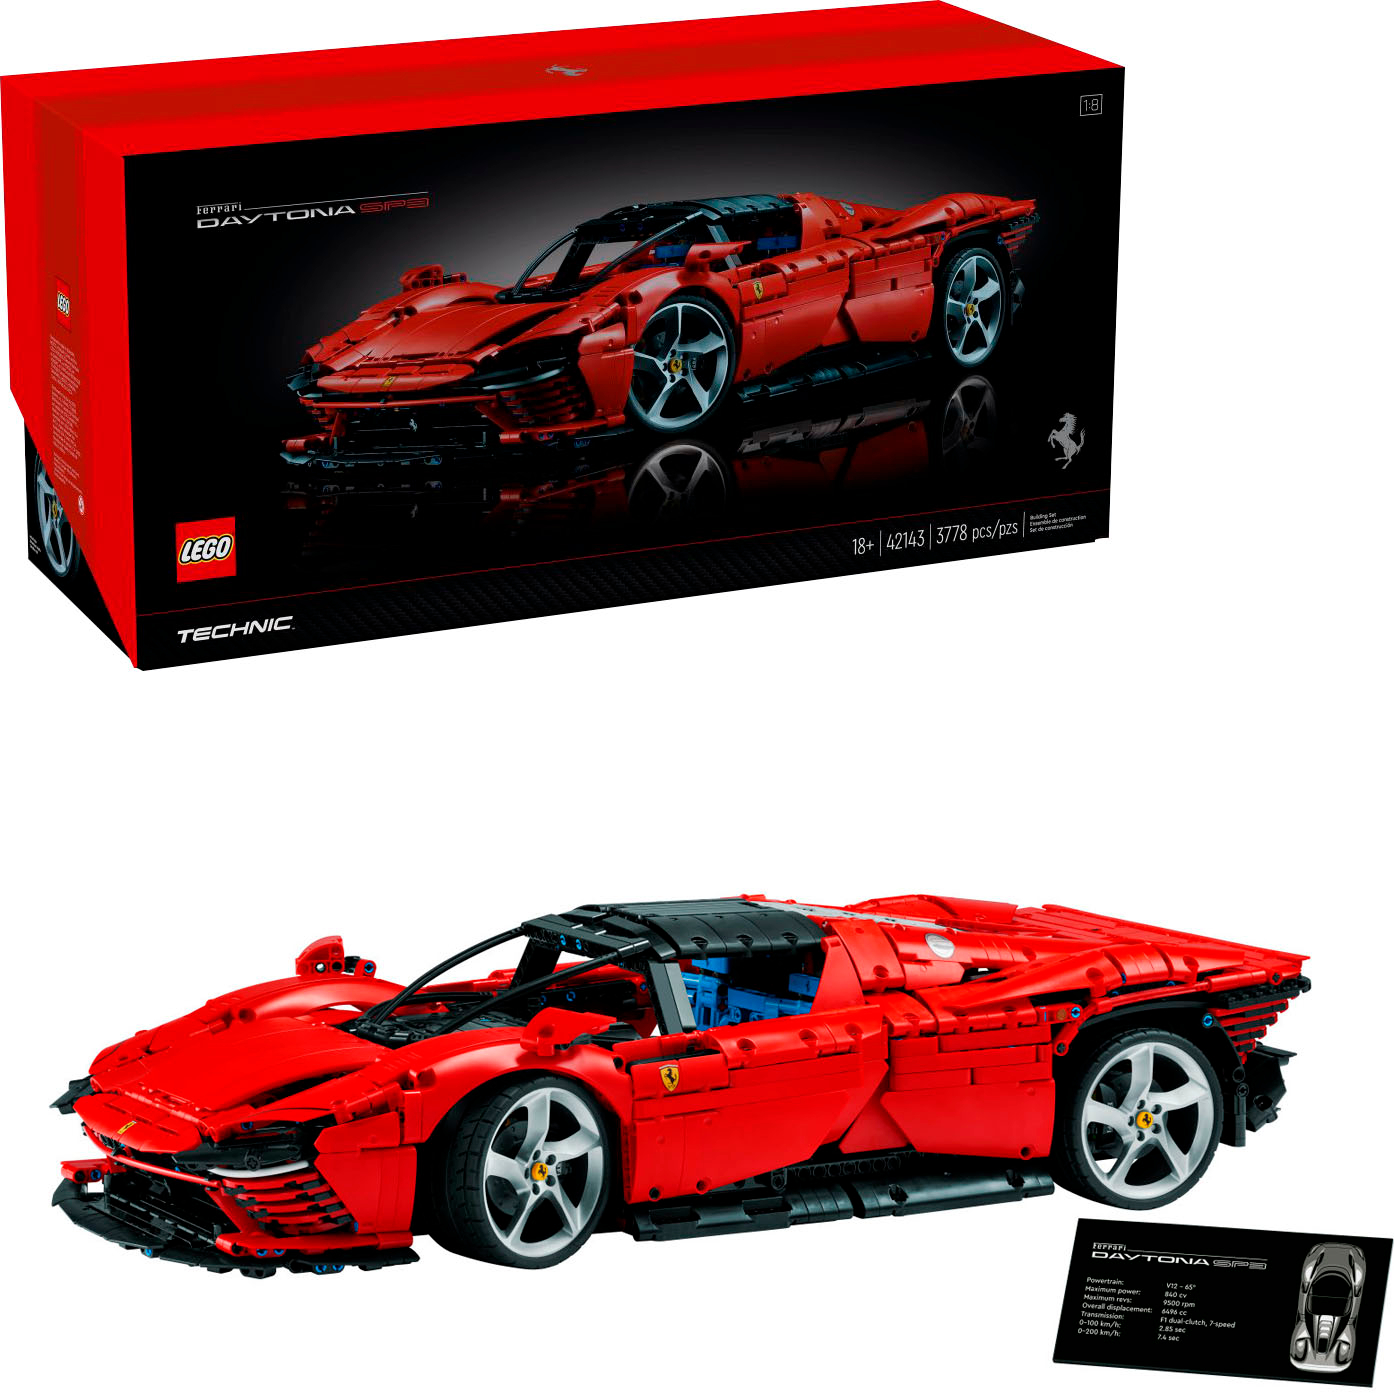 Technic Ferrari Daytona SP3 42143 6379495 Best Buy